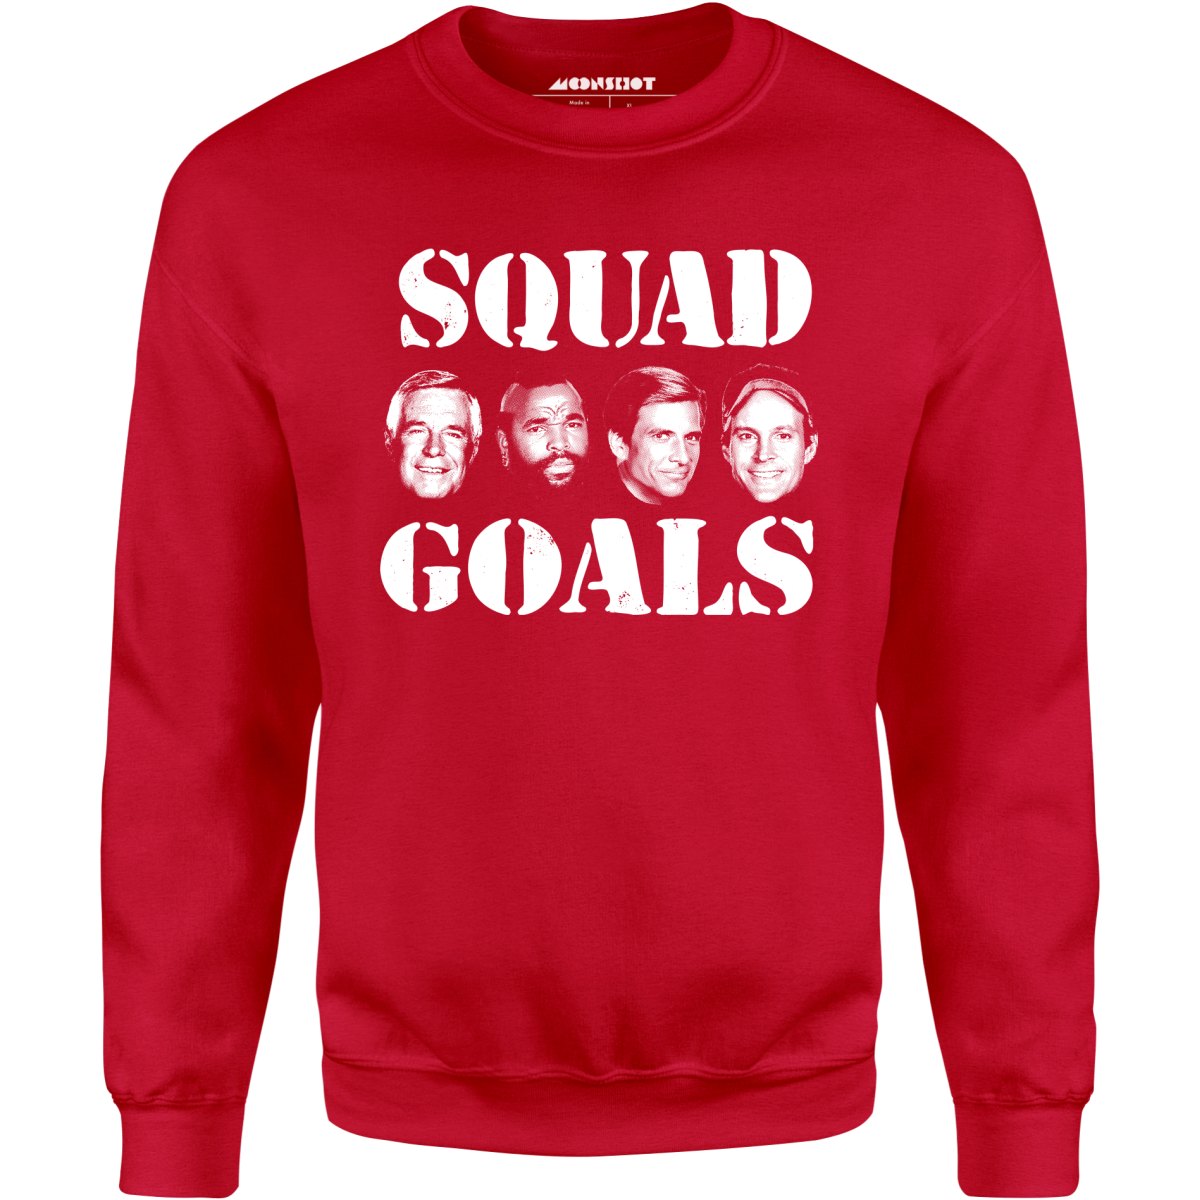 Squad Goals - A-Team - Unisex Sweatshirt